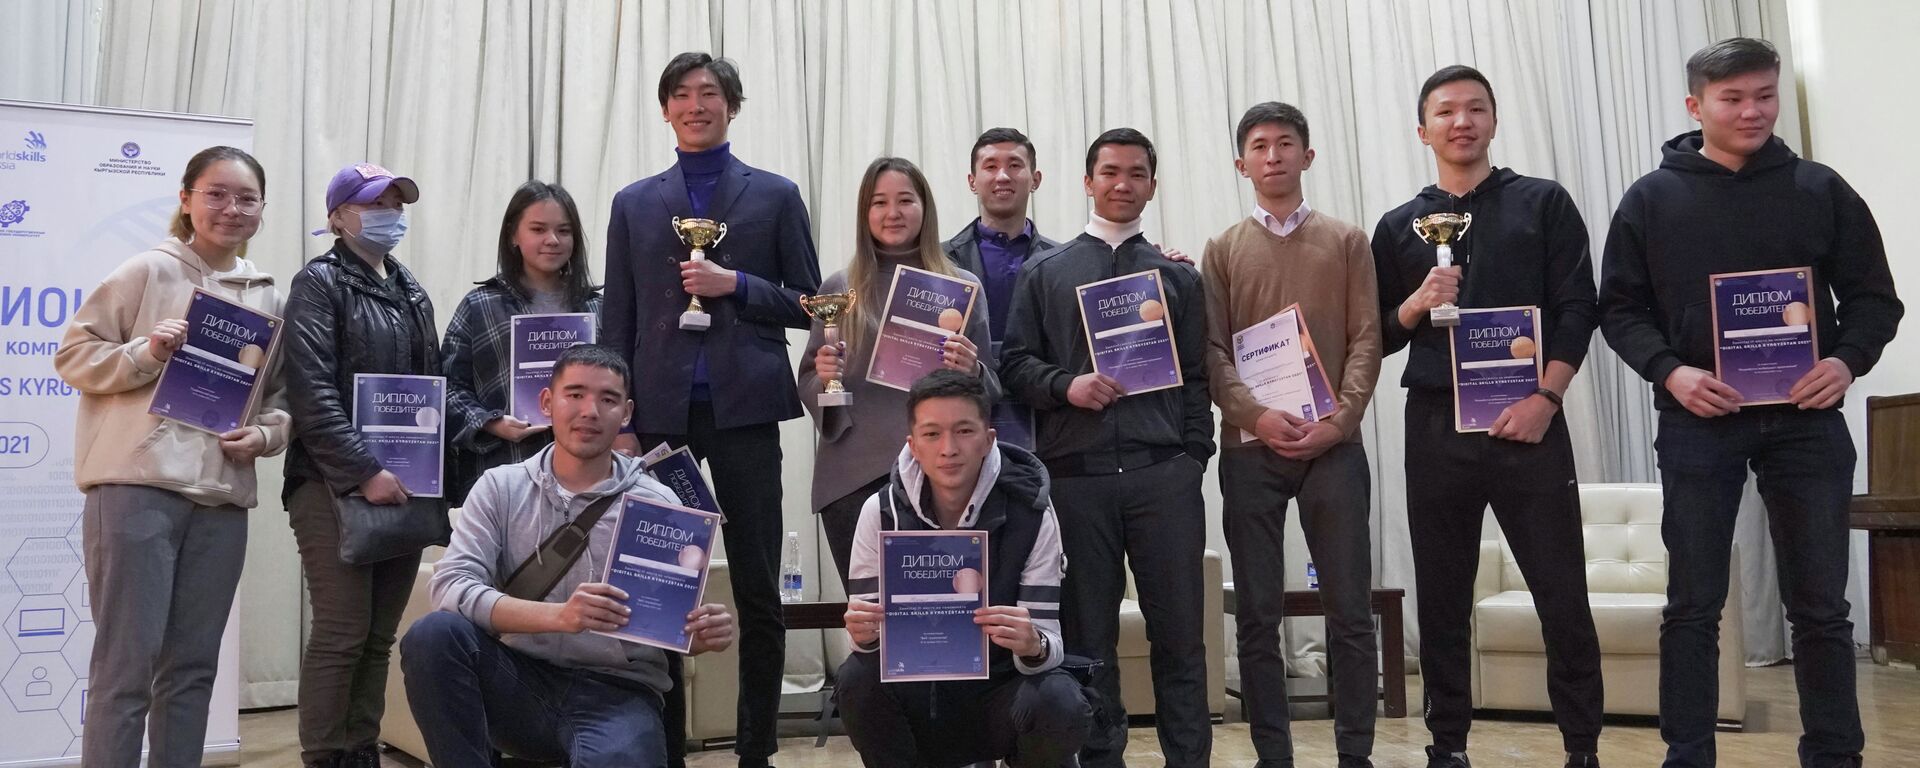 Участники чемпионата Digital Skills Kyrgyzstan 2021 - Sputnik Кыргызстан, 1920, 25.11.2021